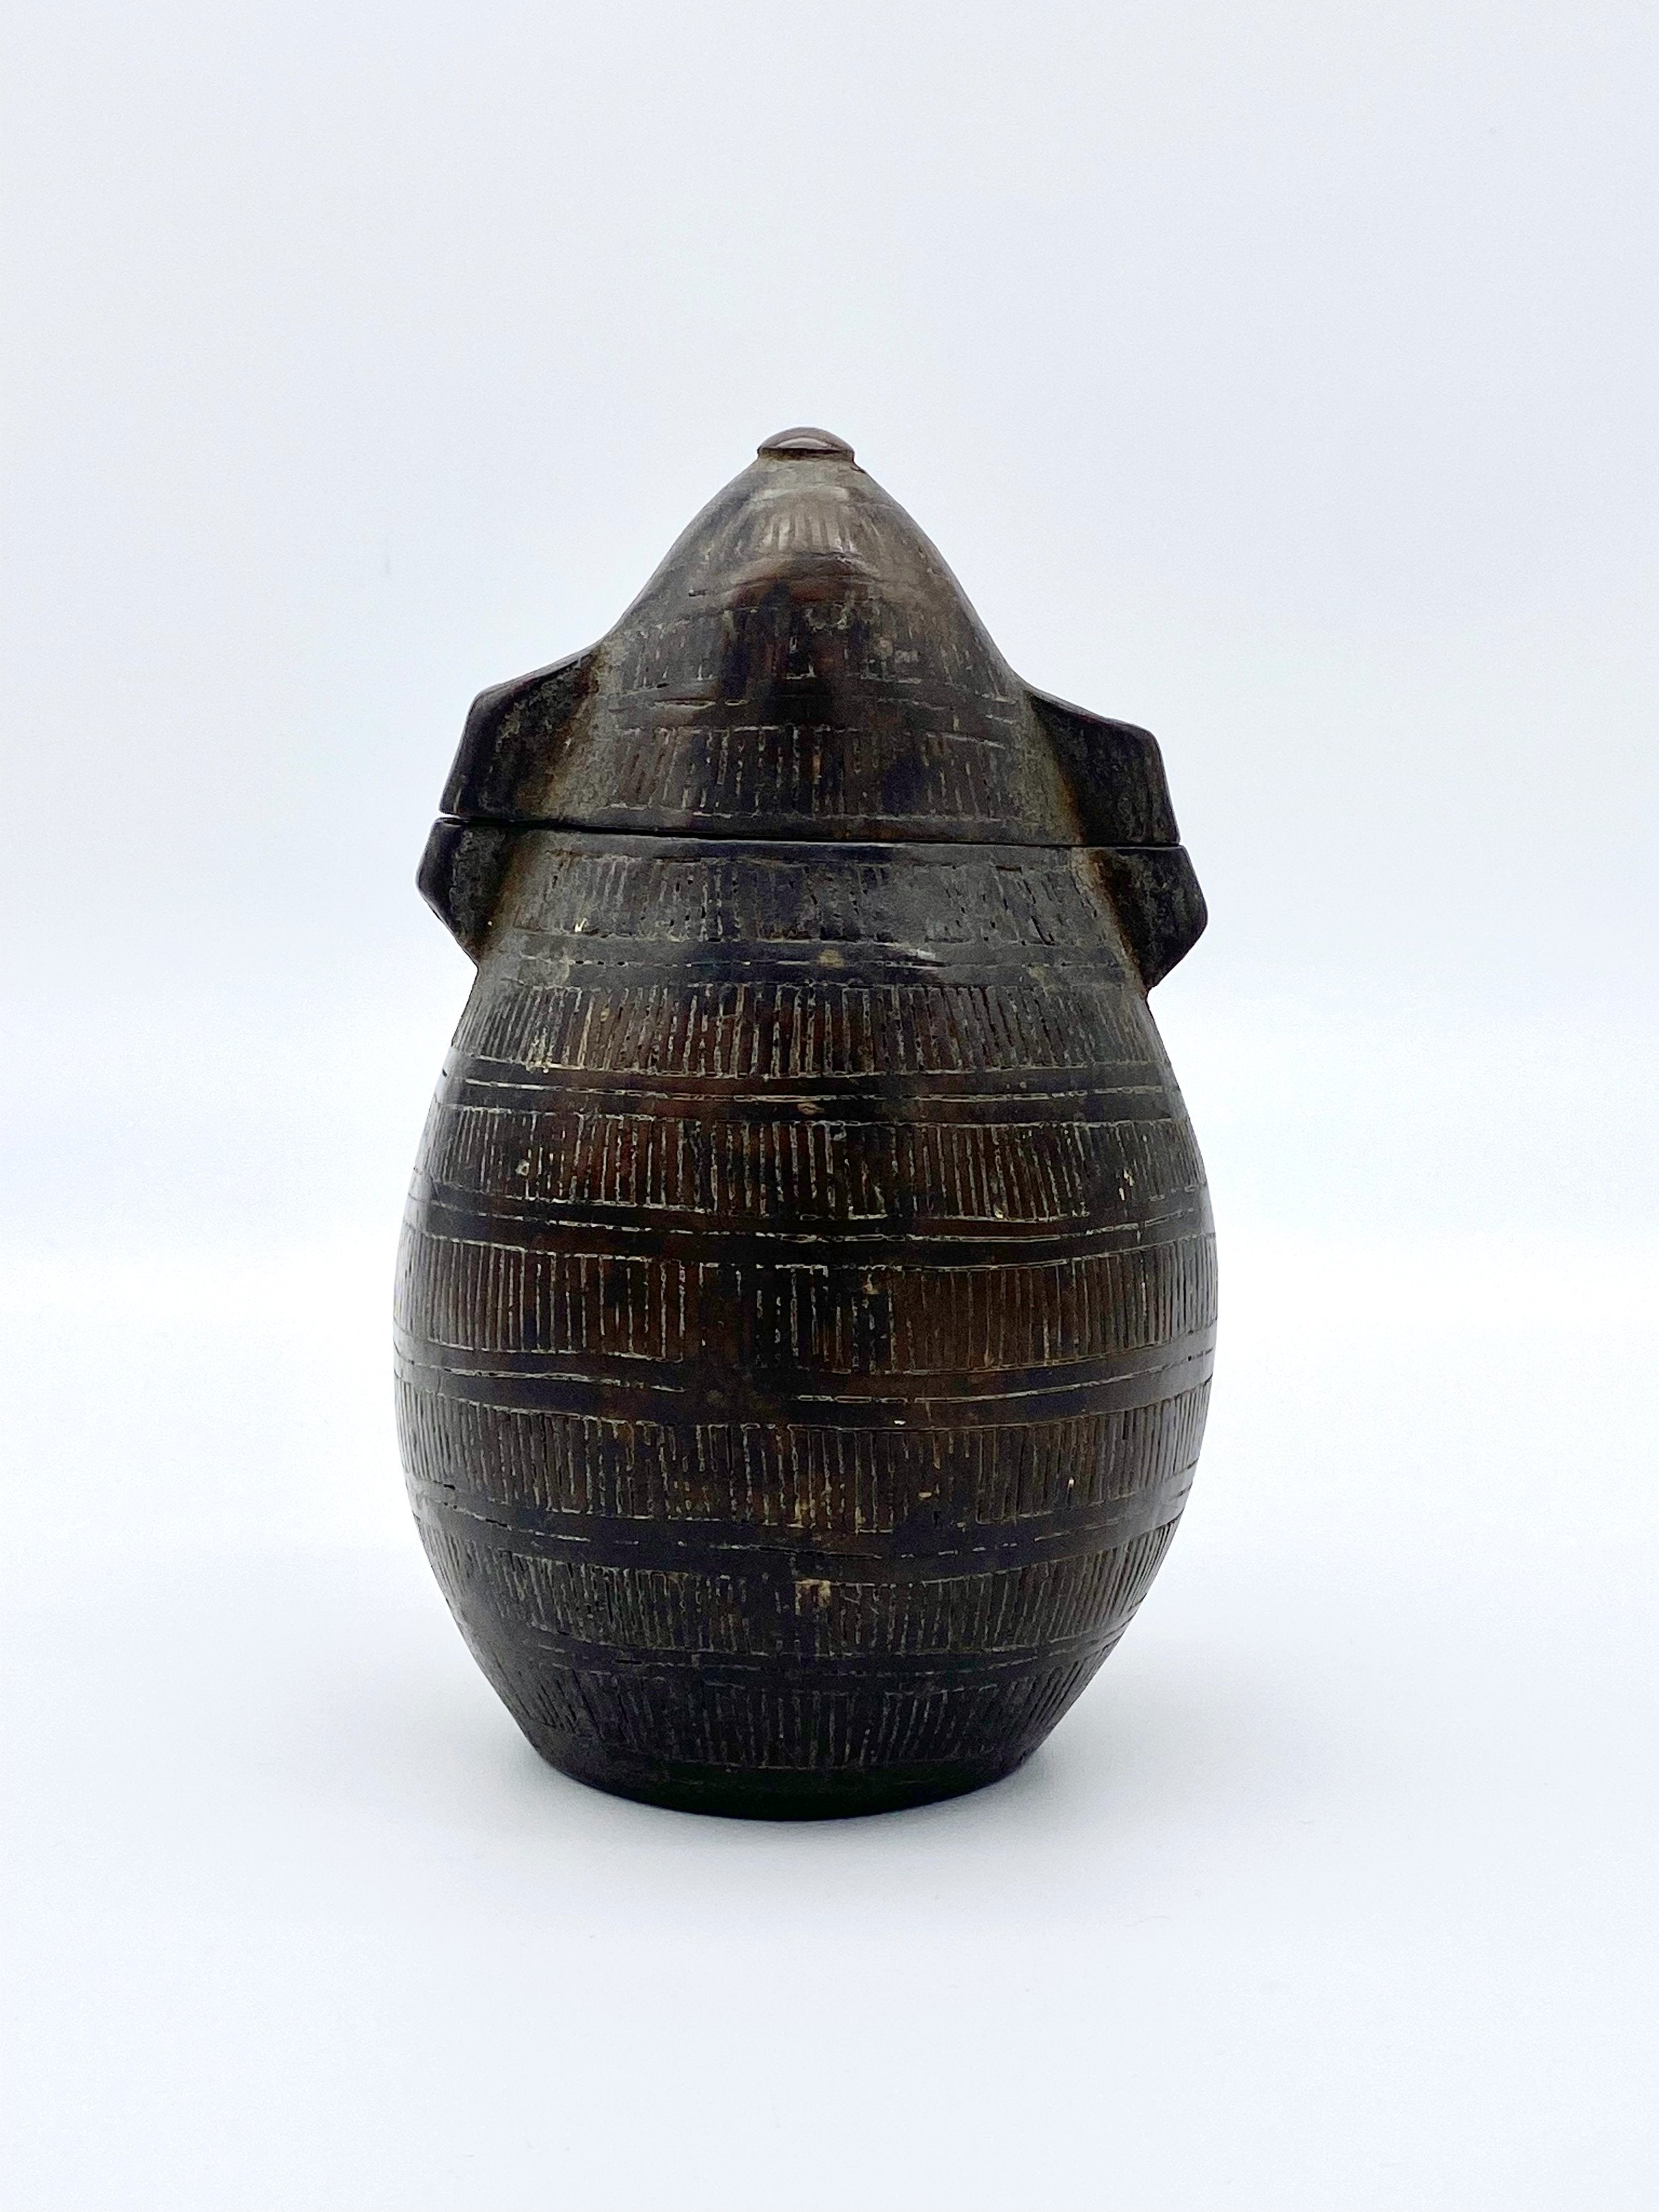 Large Carved Kuba Tutukipfula Gunpowder Flask, Wood. D.R. Congo, 19th-20thC